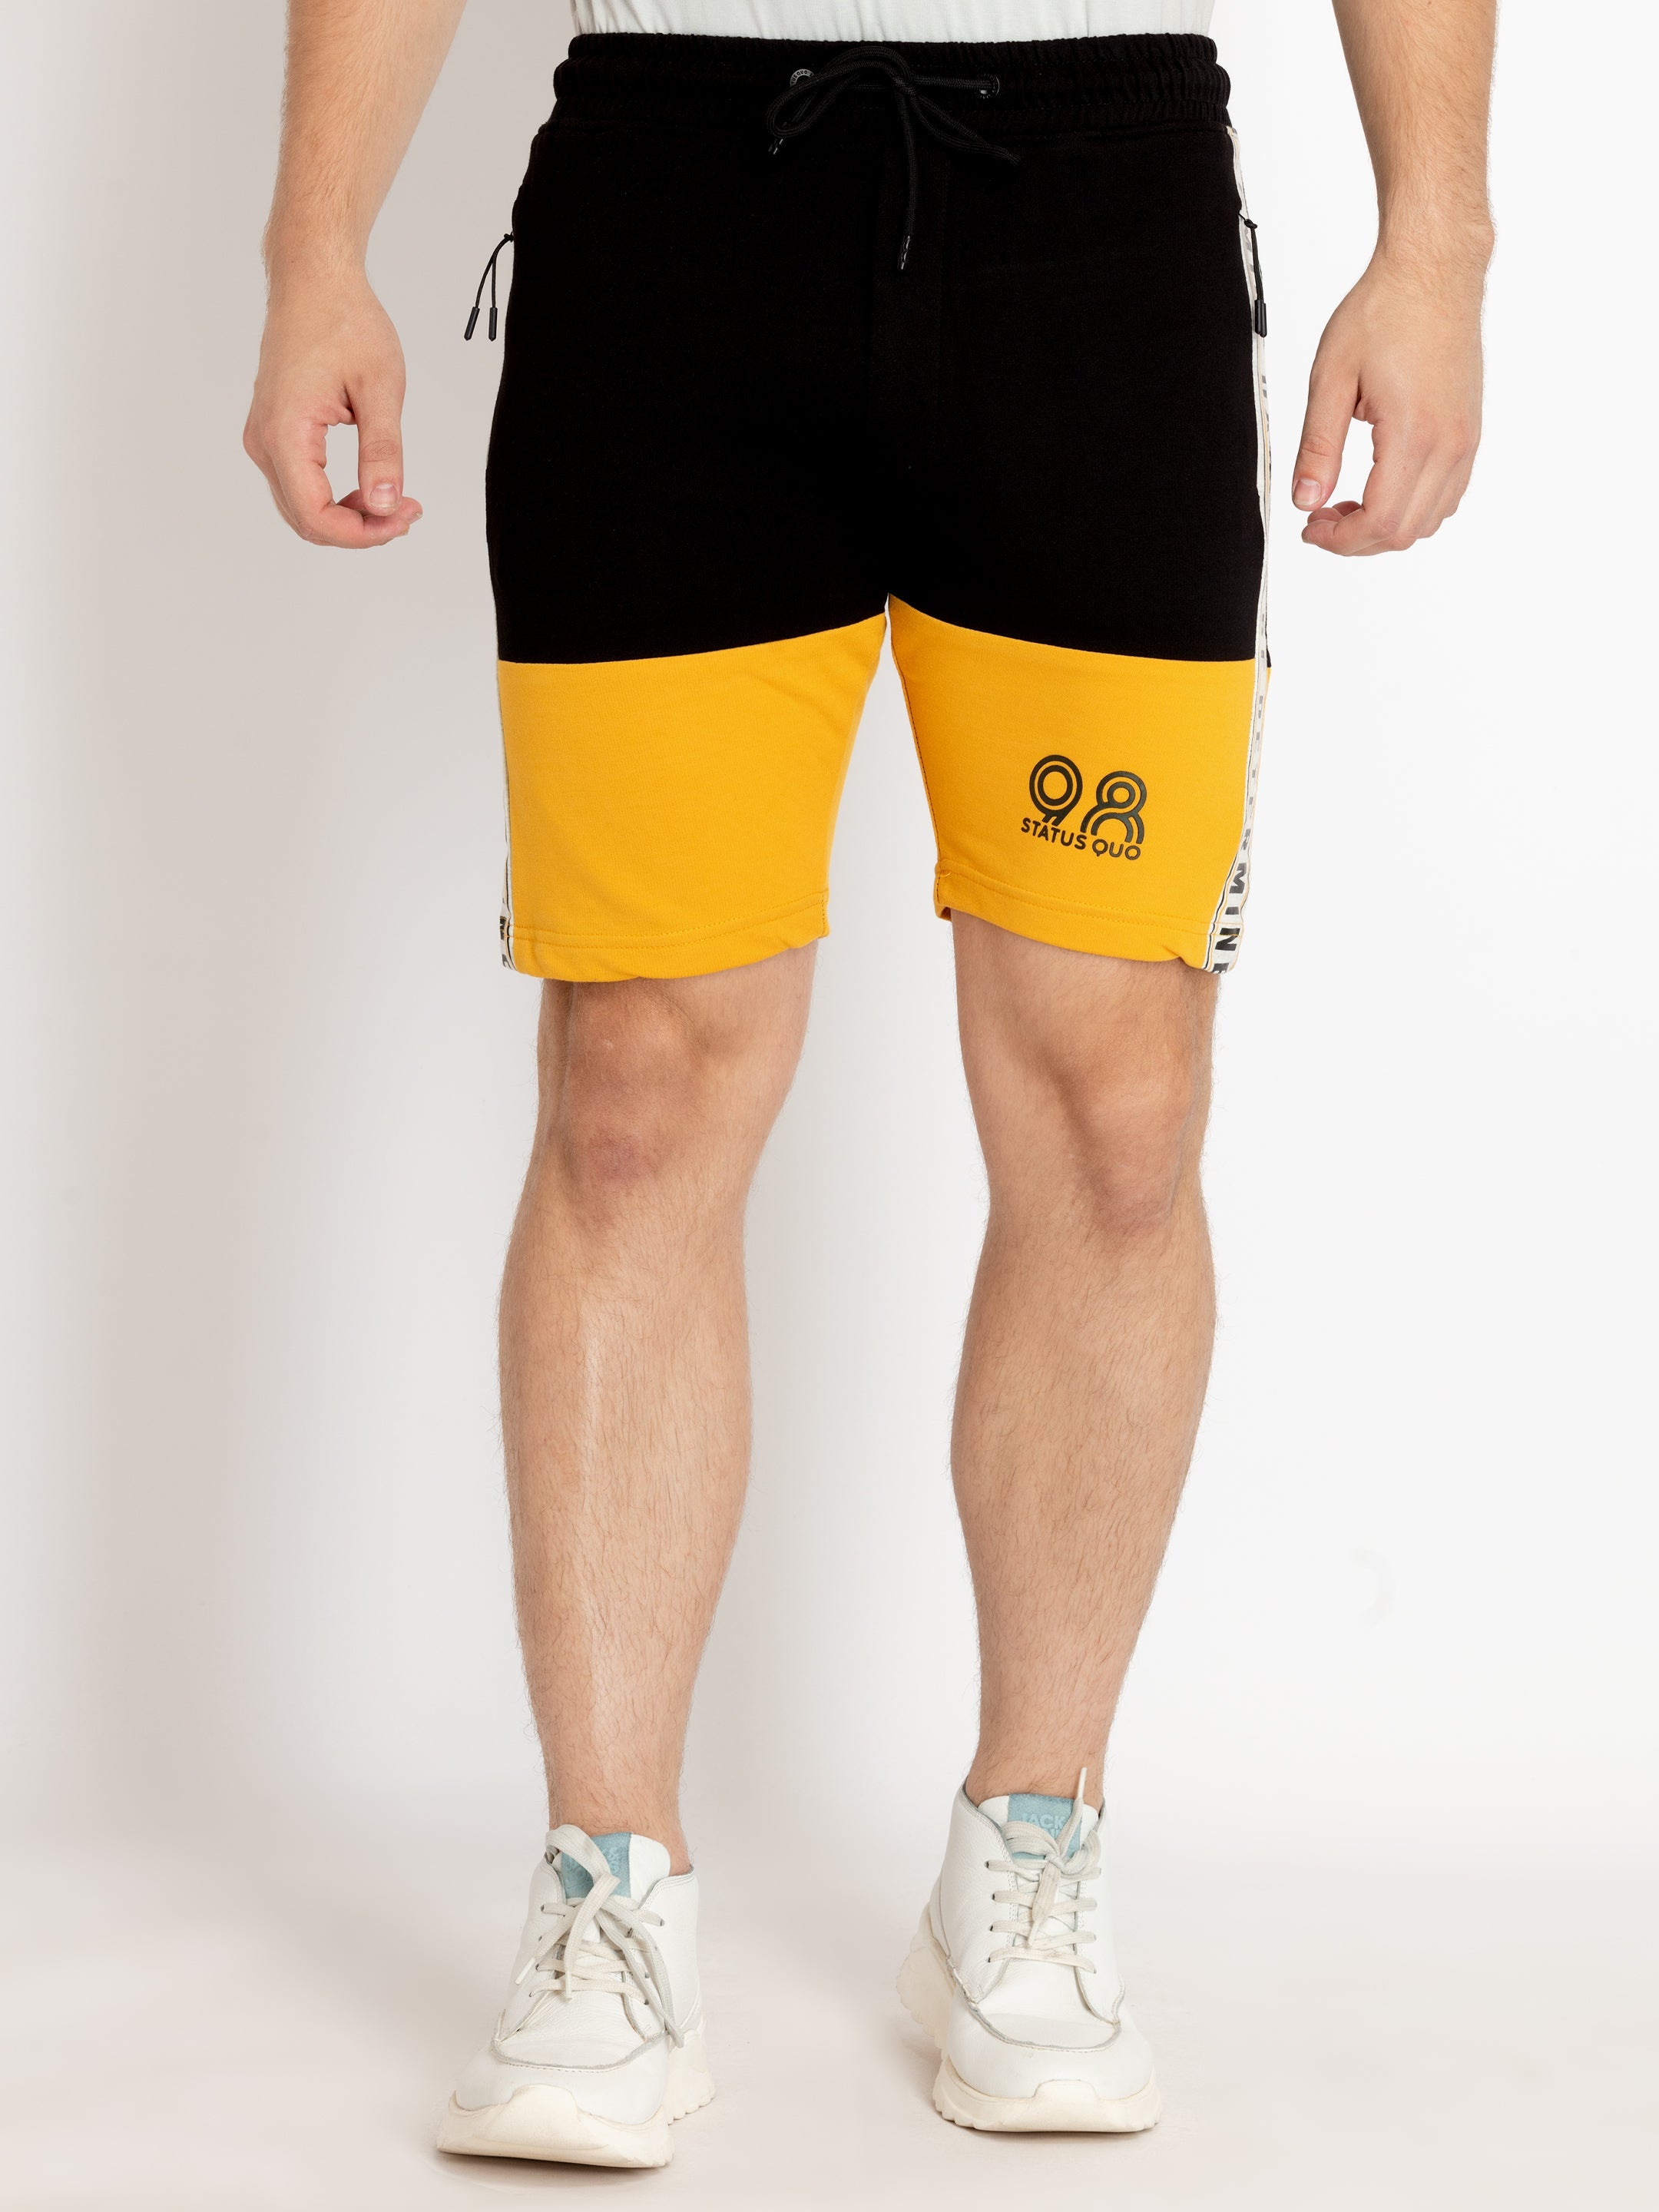 Status Quo |Men's Printed Shorts - 3XL, 4XL, 5XL